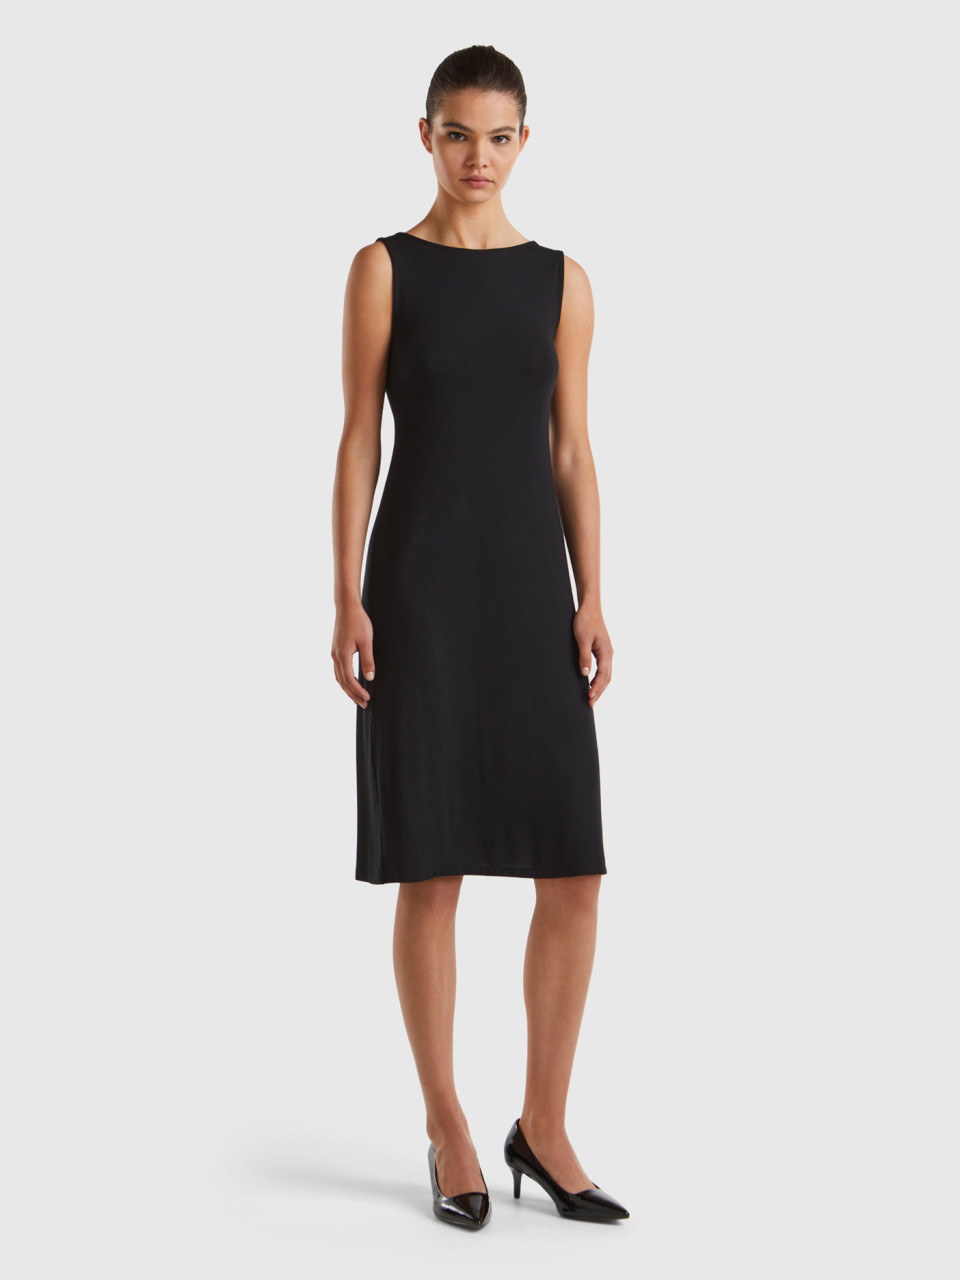 Benetton, Reversible Dress In Stretch Viscose, Black, Women